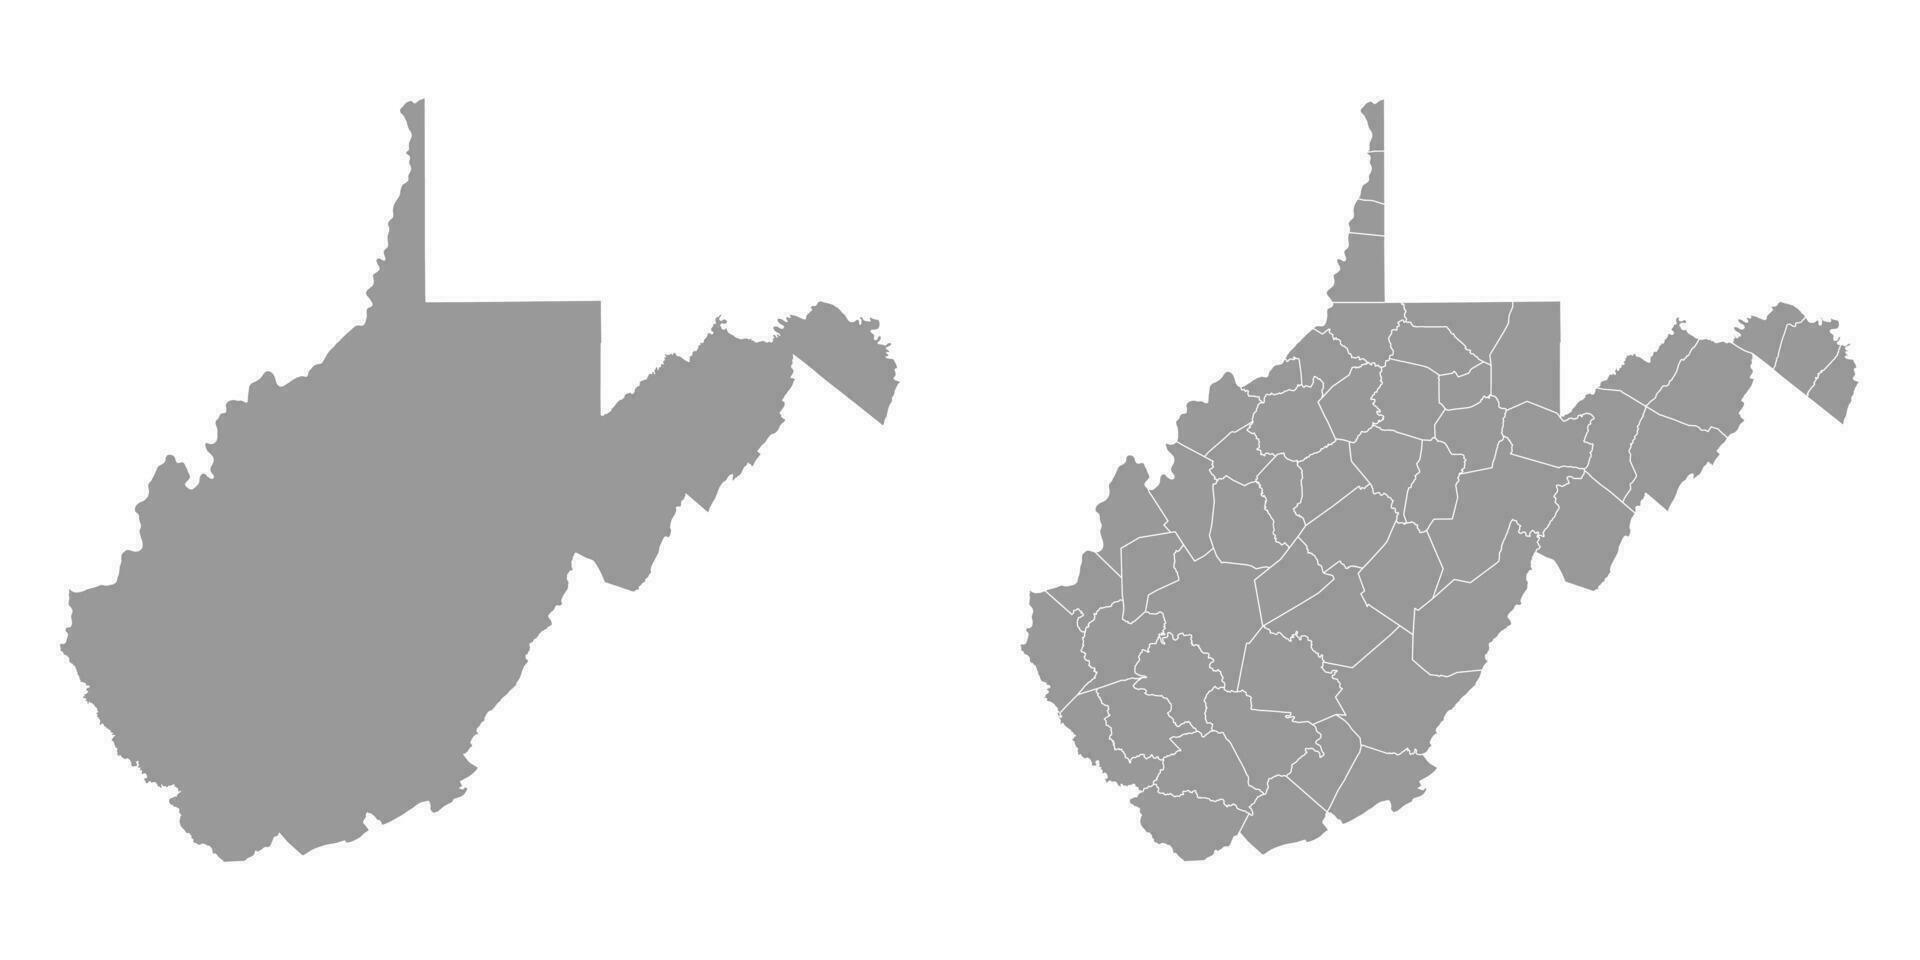 Westen Virginia Zustand grau Karten. Vektor Illustration.